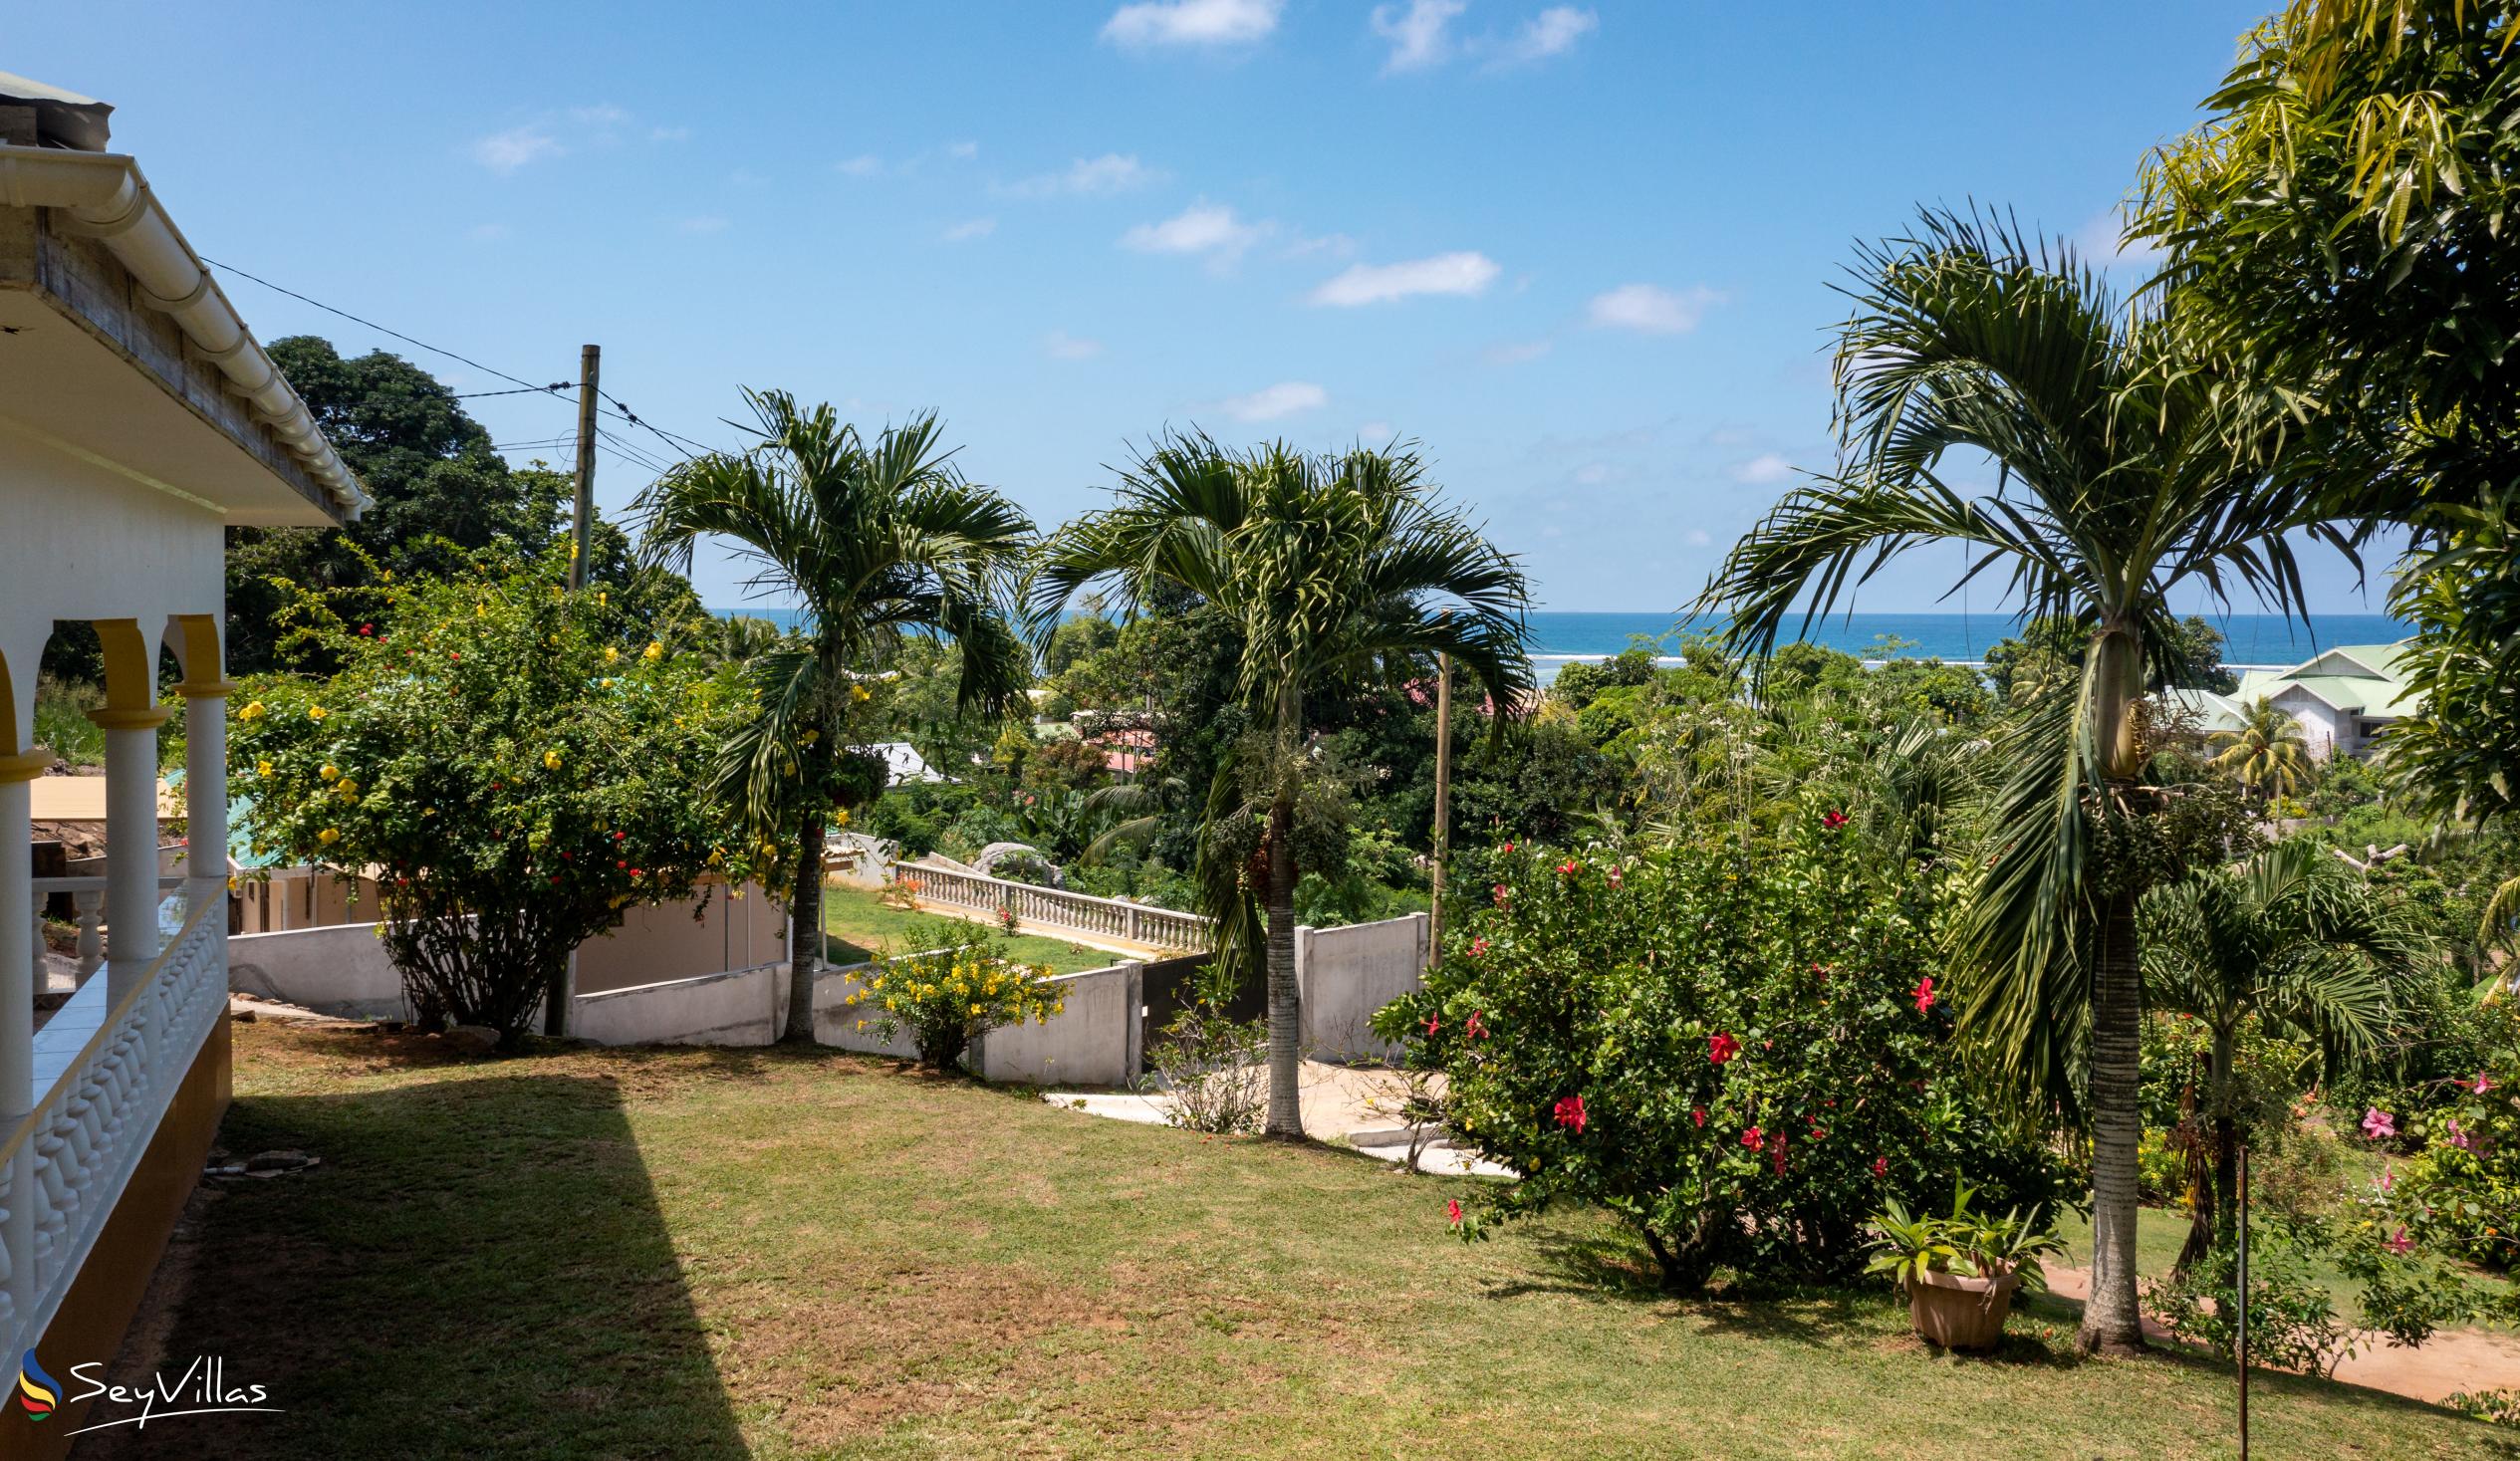 Foto 71: Maison Marikel - Villa 2 chambres - Mahé (Seychelles)